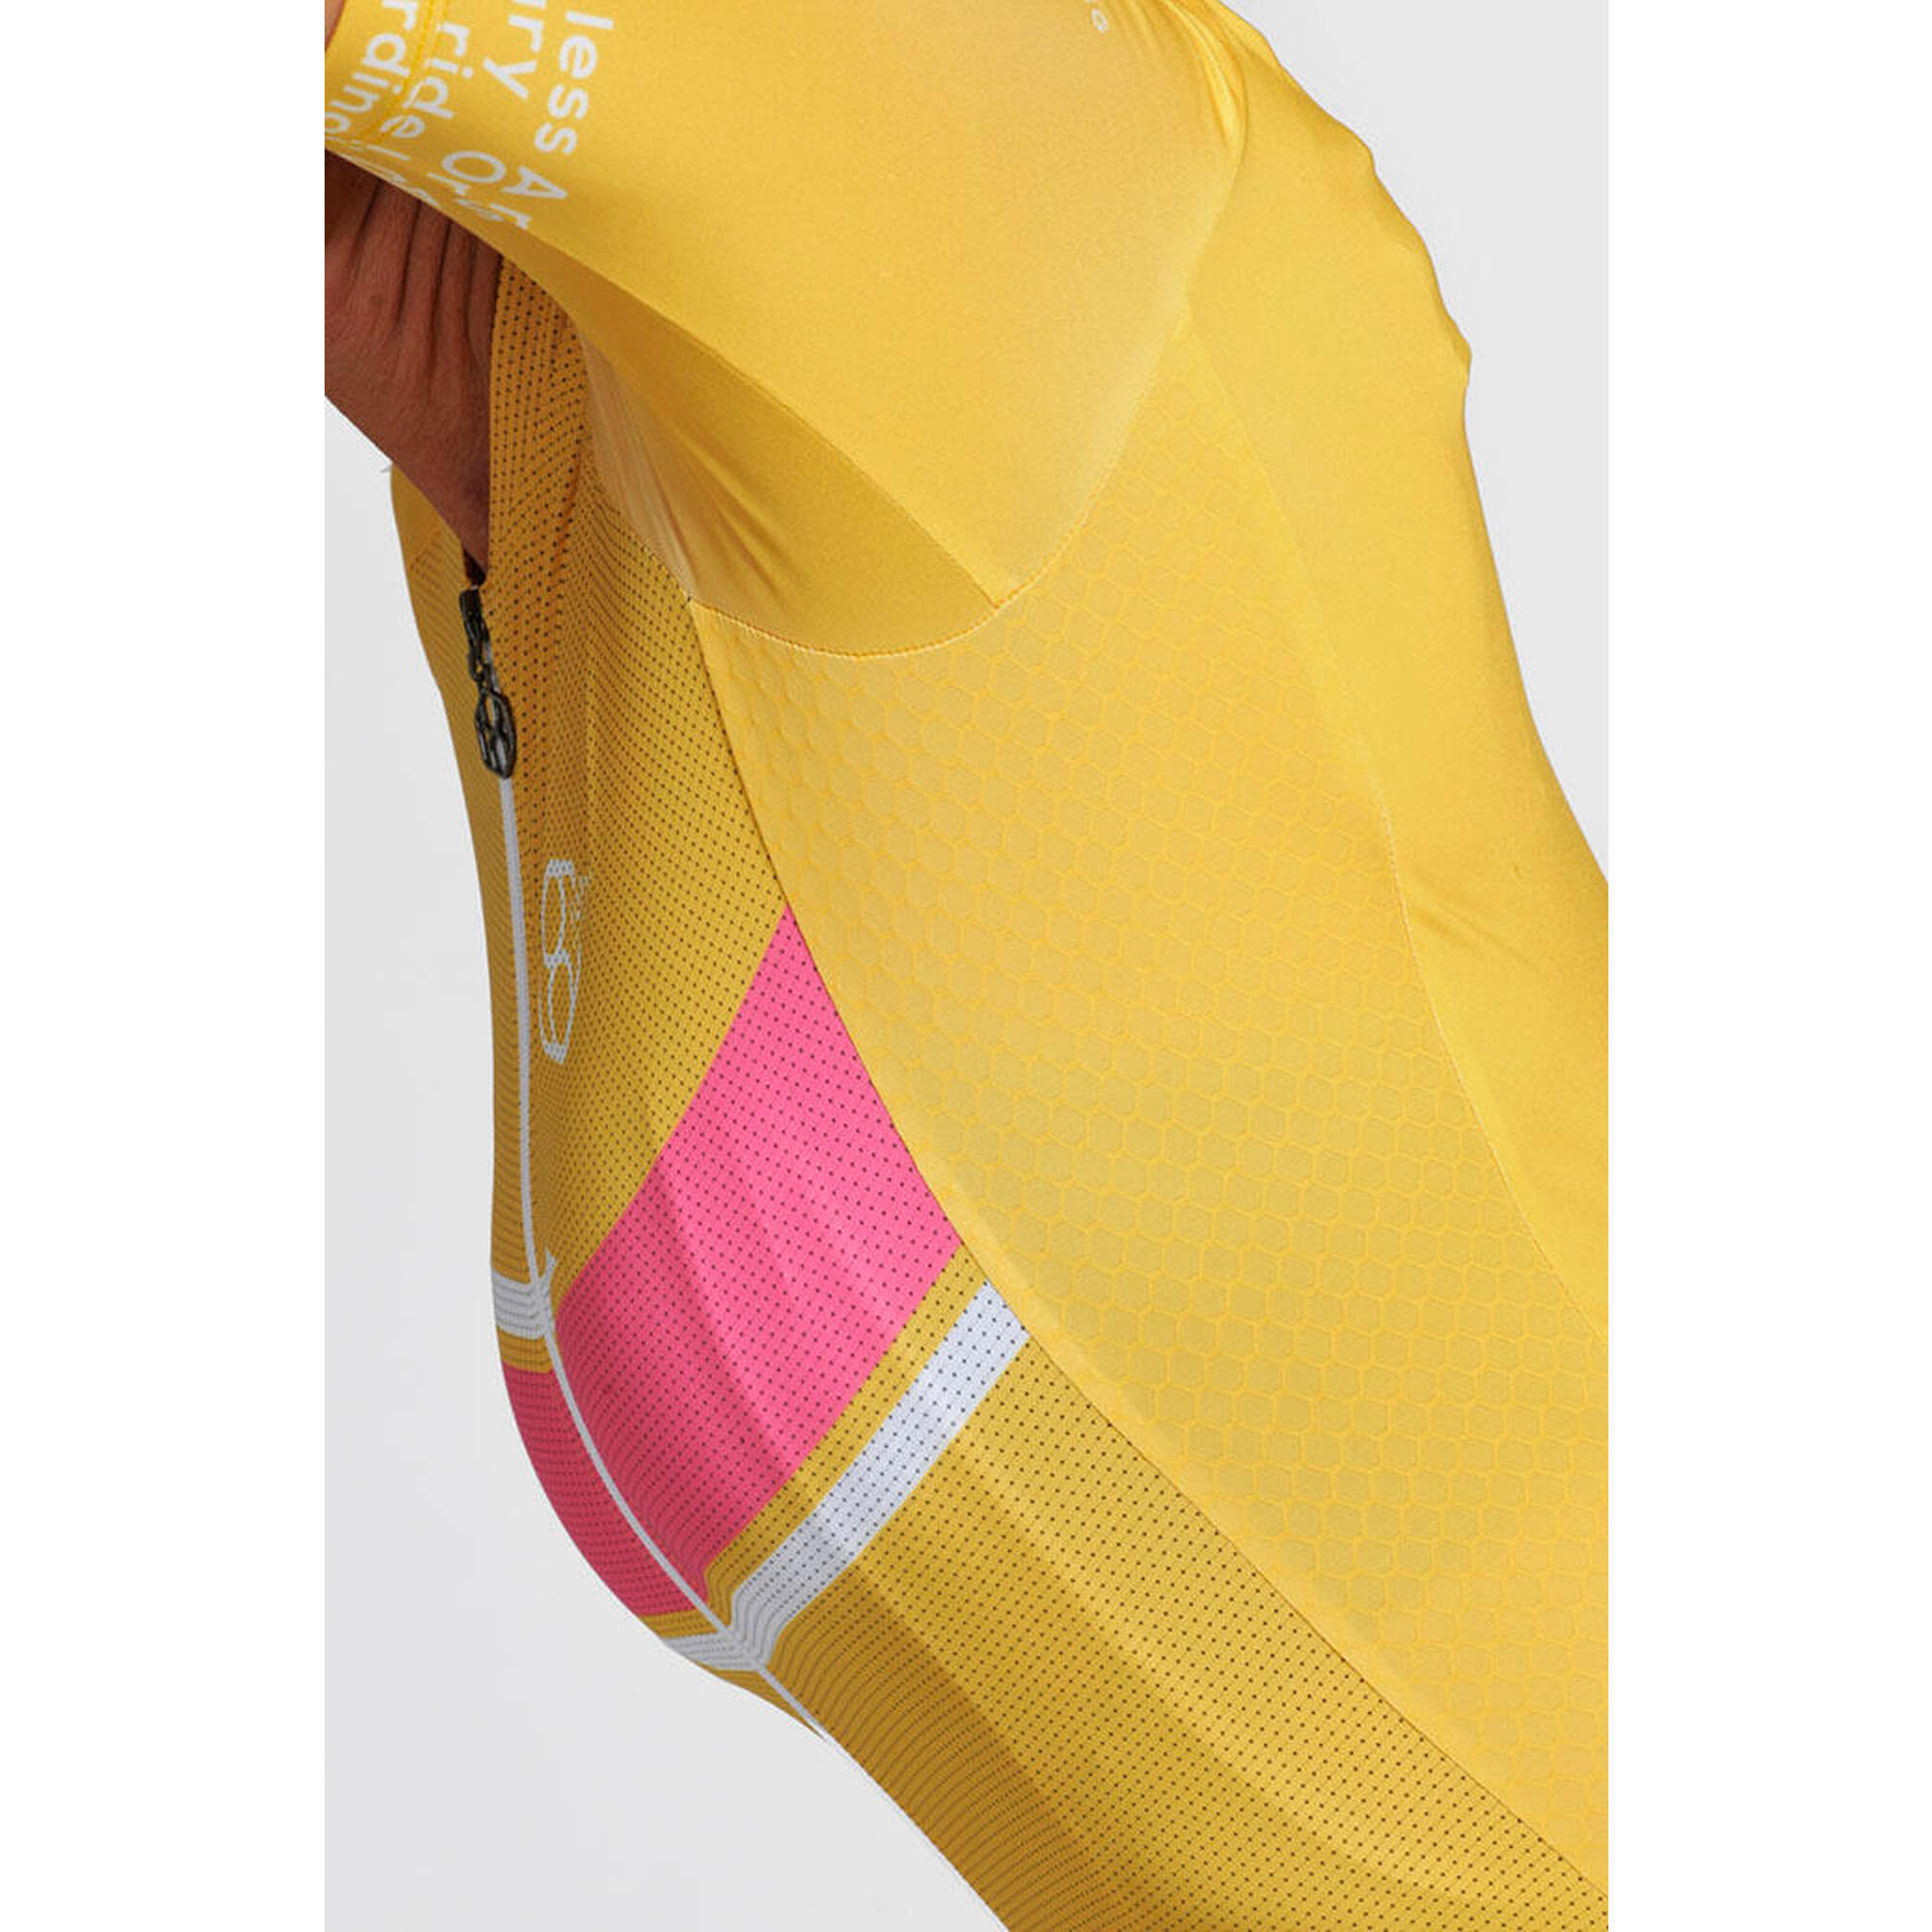 Camiseta de ciclismo para mujer de manga corta amarillo intenso 8andCounting